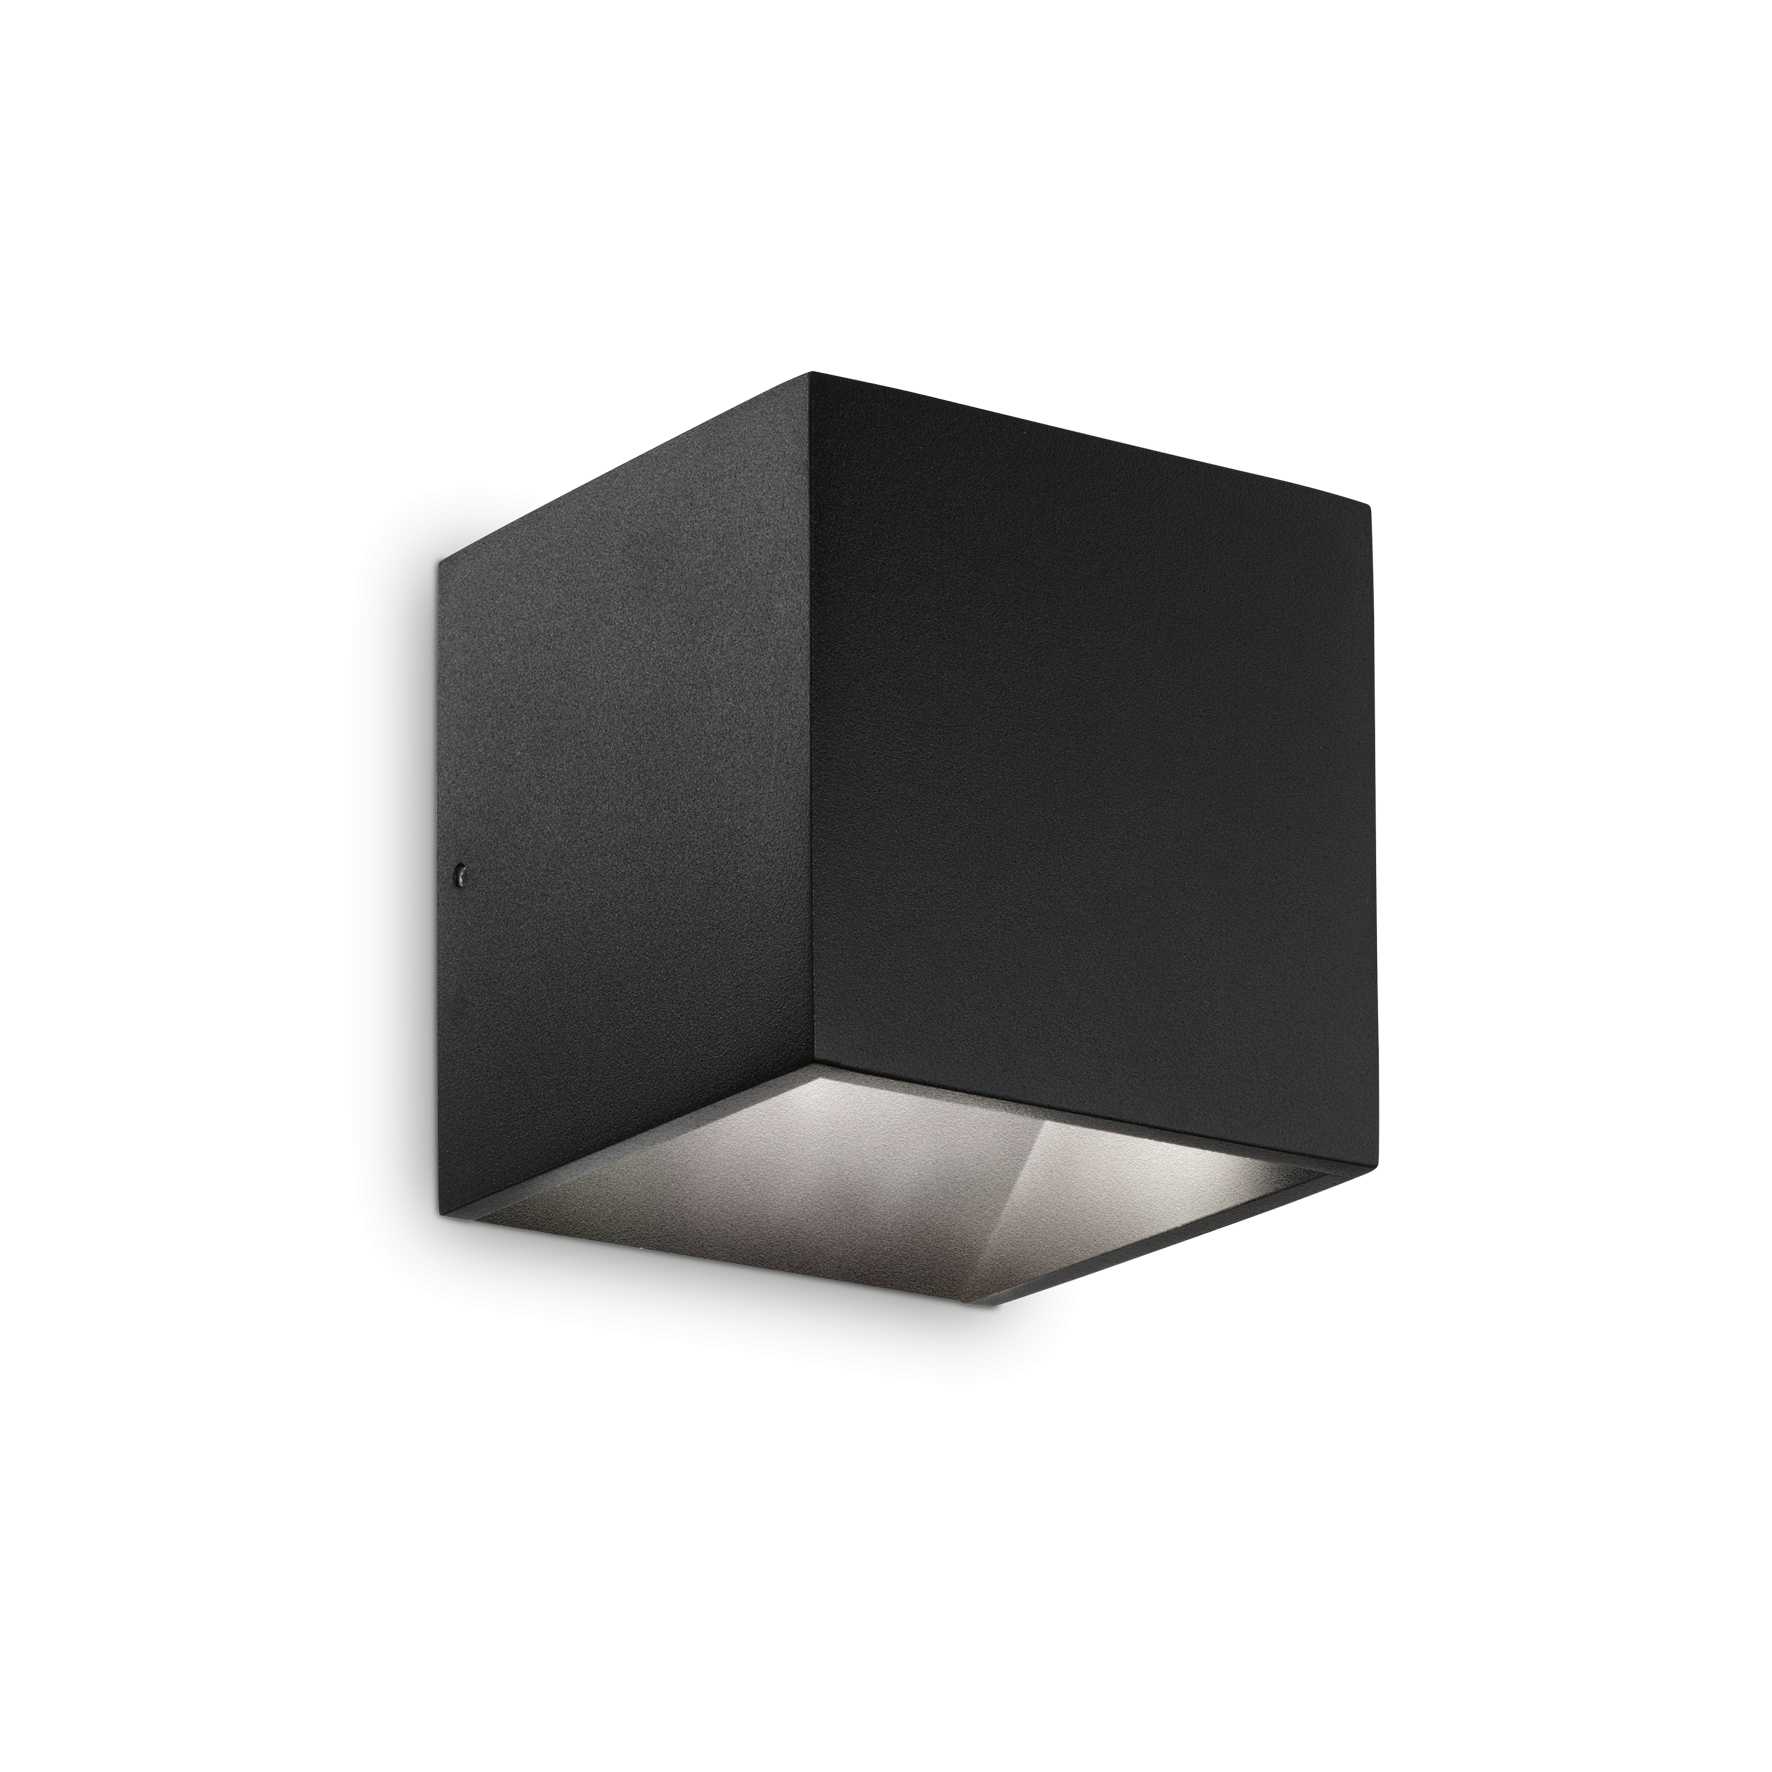 AD hotelska oprema Vanjska zidna lampa Rubik ap 3000k- Crna boja slika proizvoda